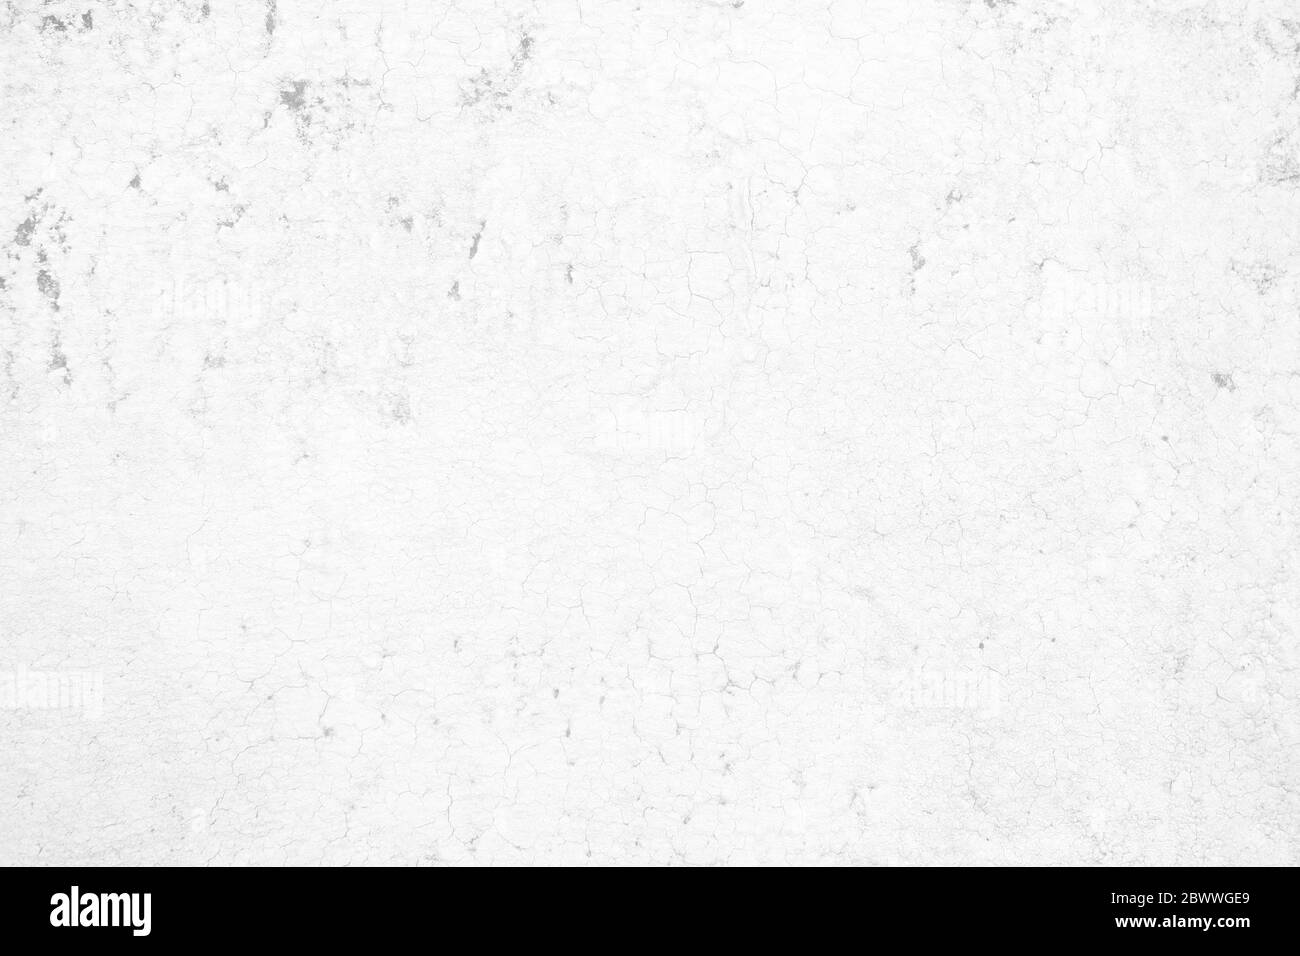 White Grunge Broken Concrete Ground Texture Background Stock Photo - Alamy